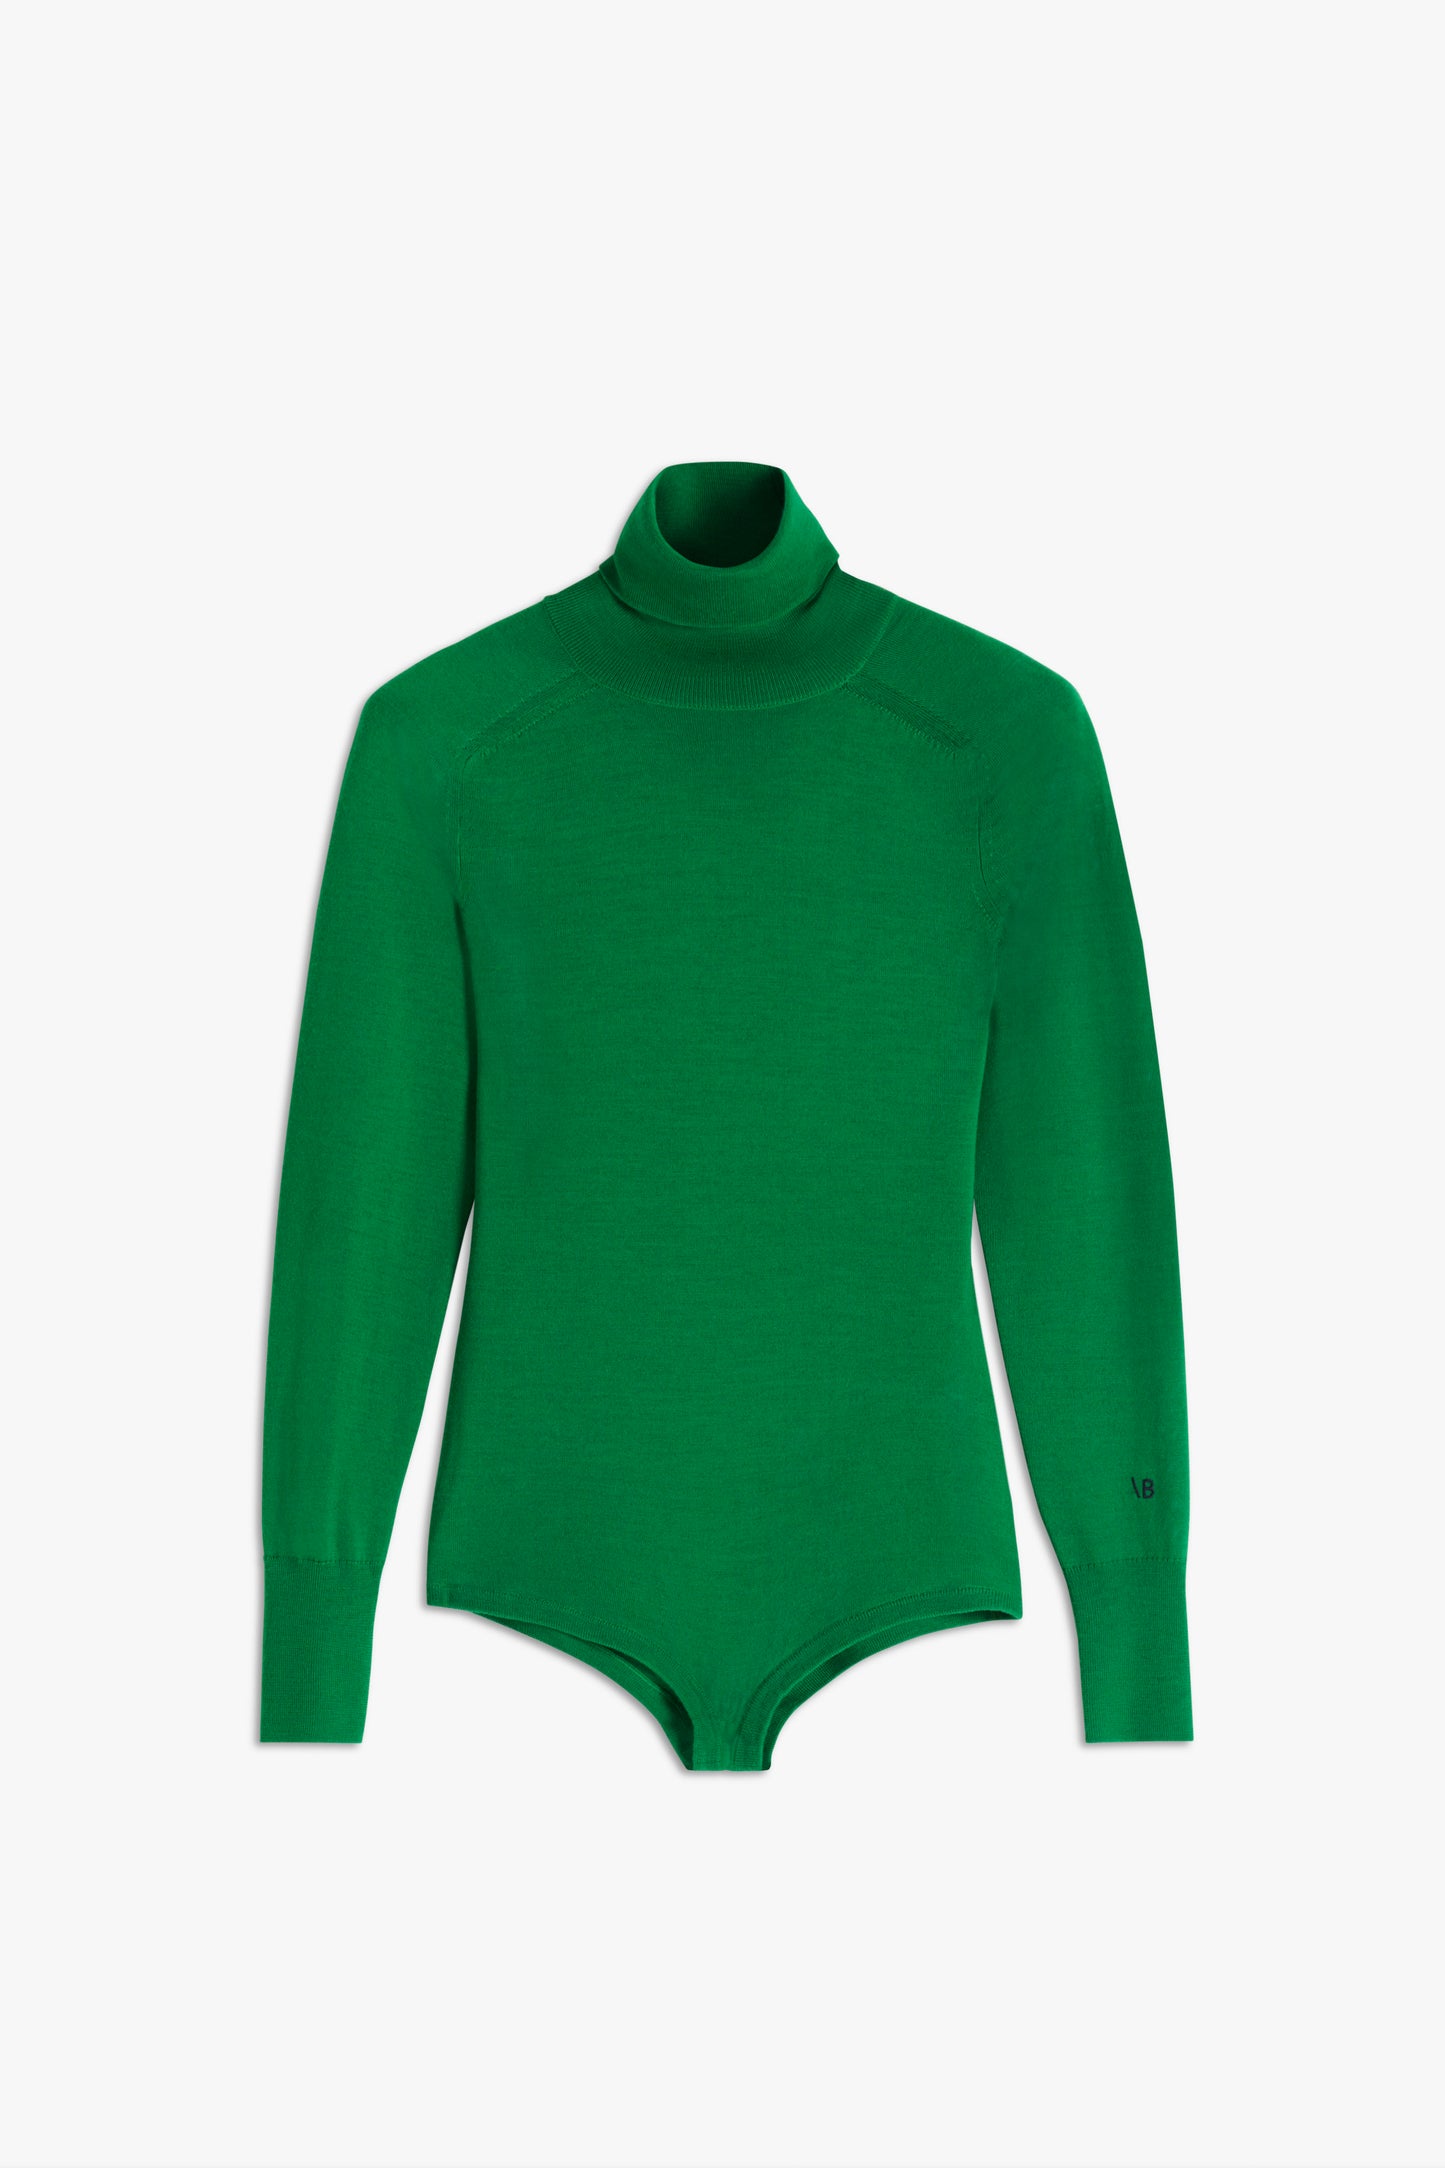 Poloneck Bodysuit in Emerald Green